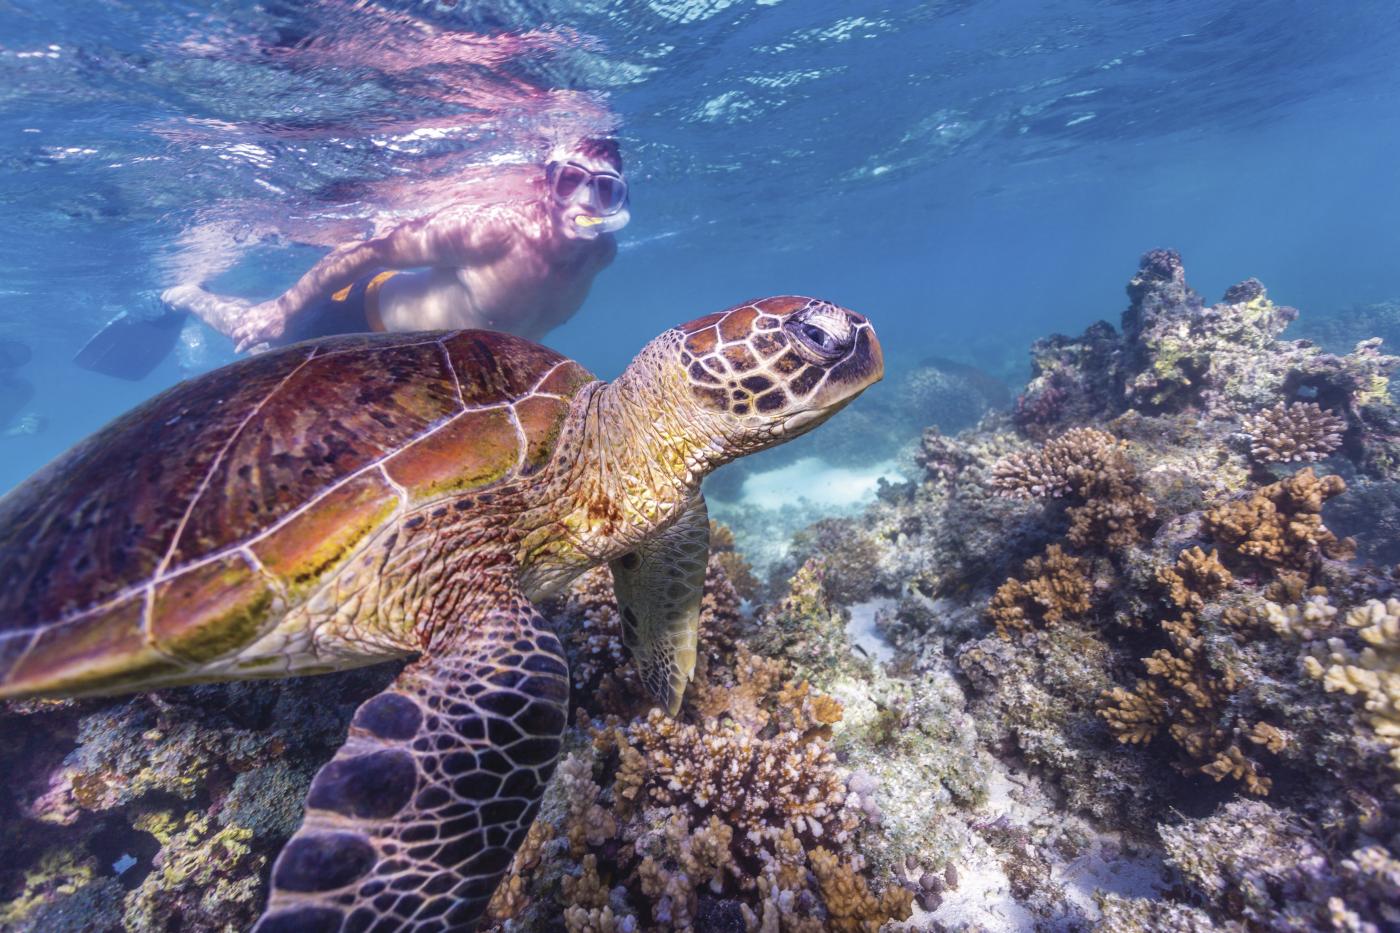 Image of a turtle underwater, a man snorkeling behind